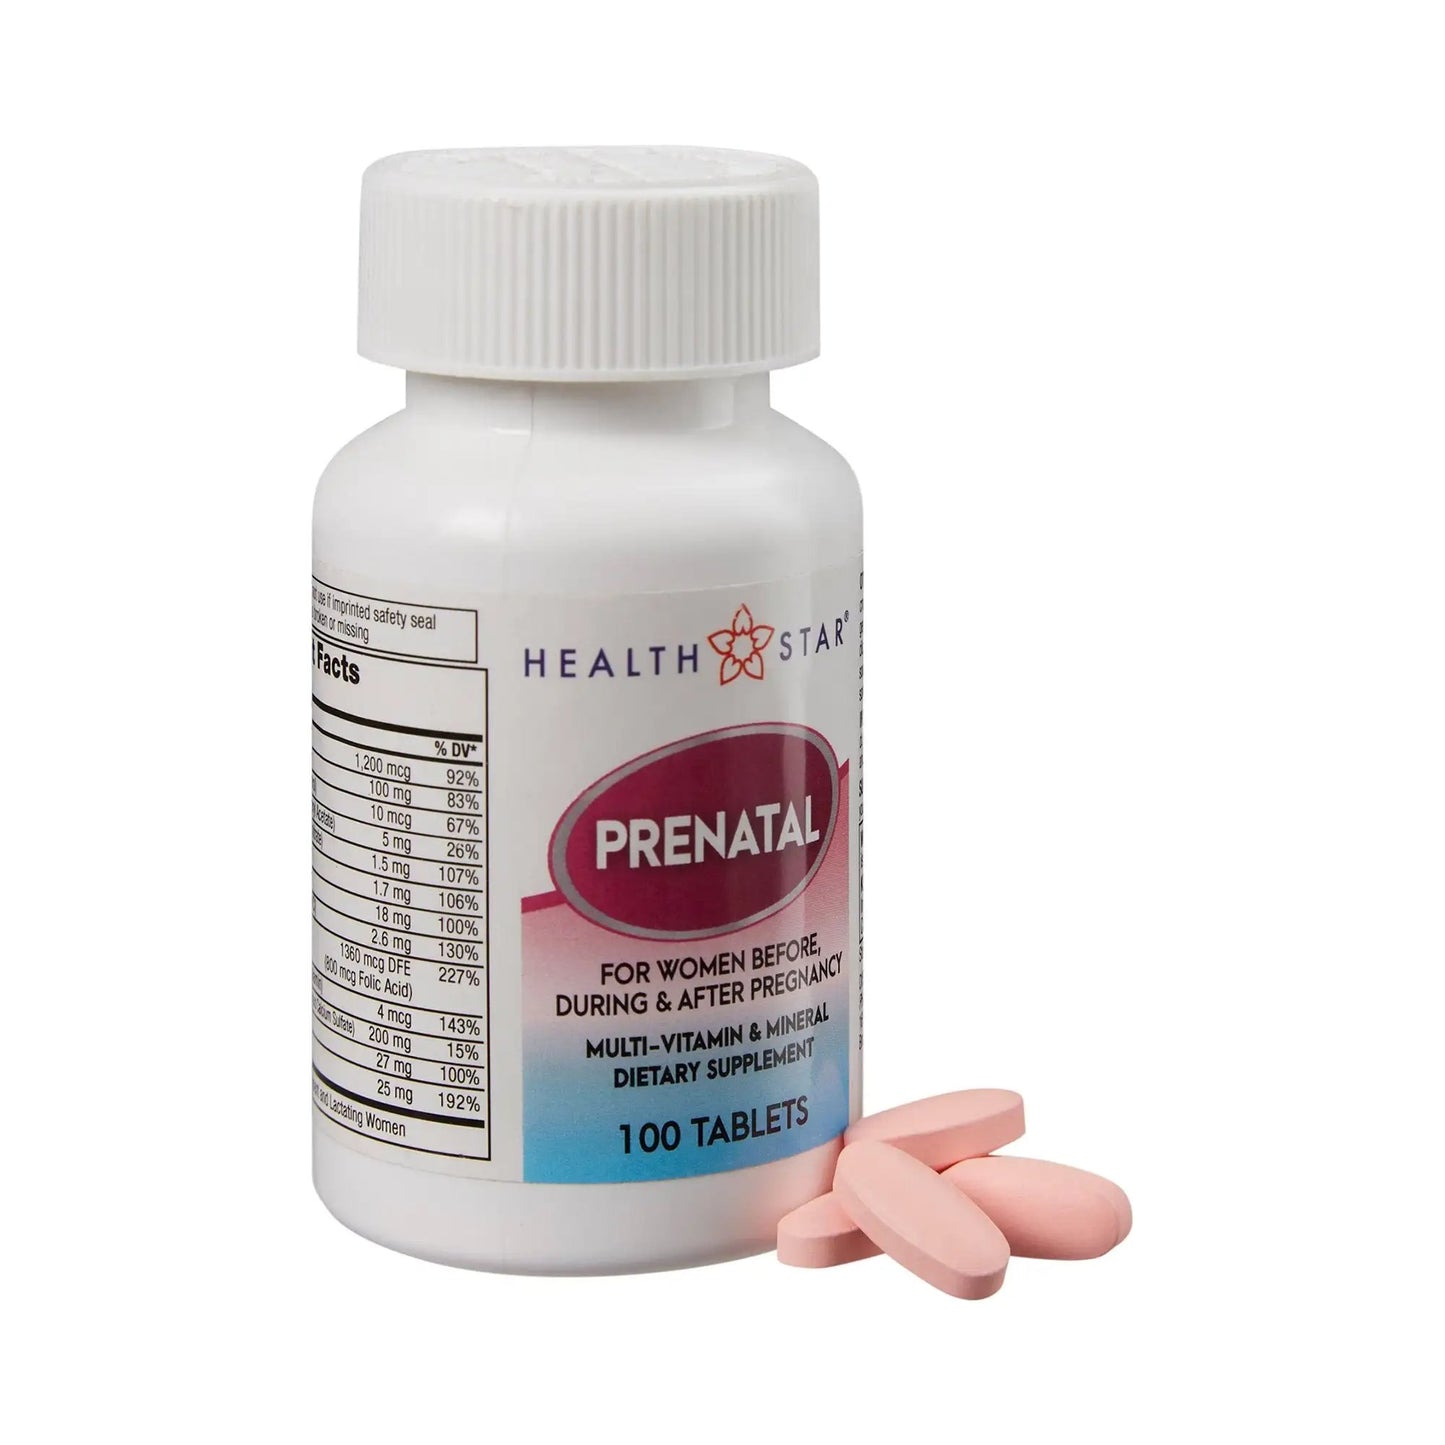 Health*Star Prenatal Vitamin Supplement, 100 Tablets per Bottle